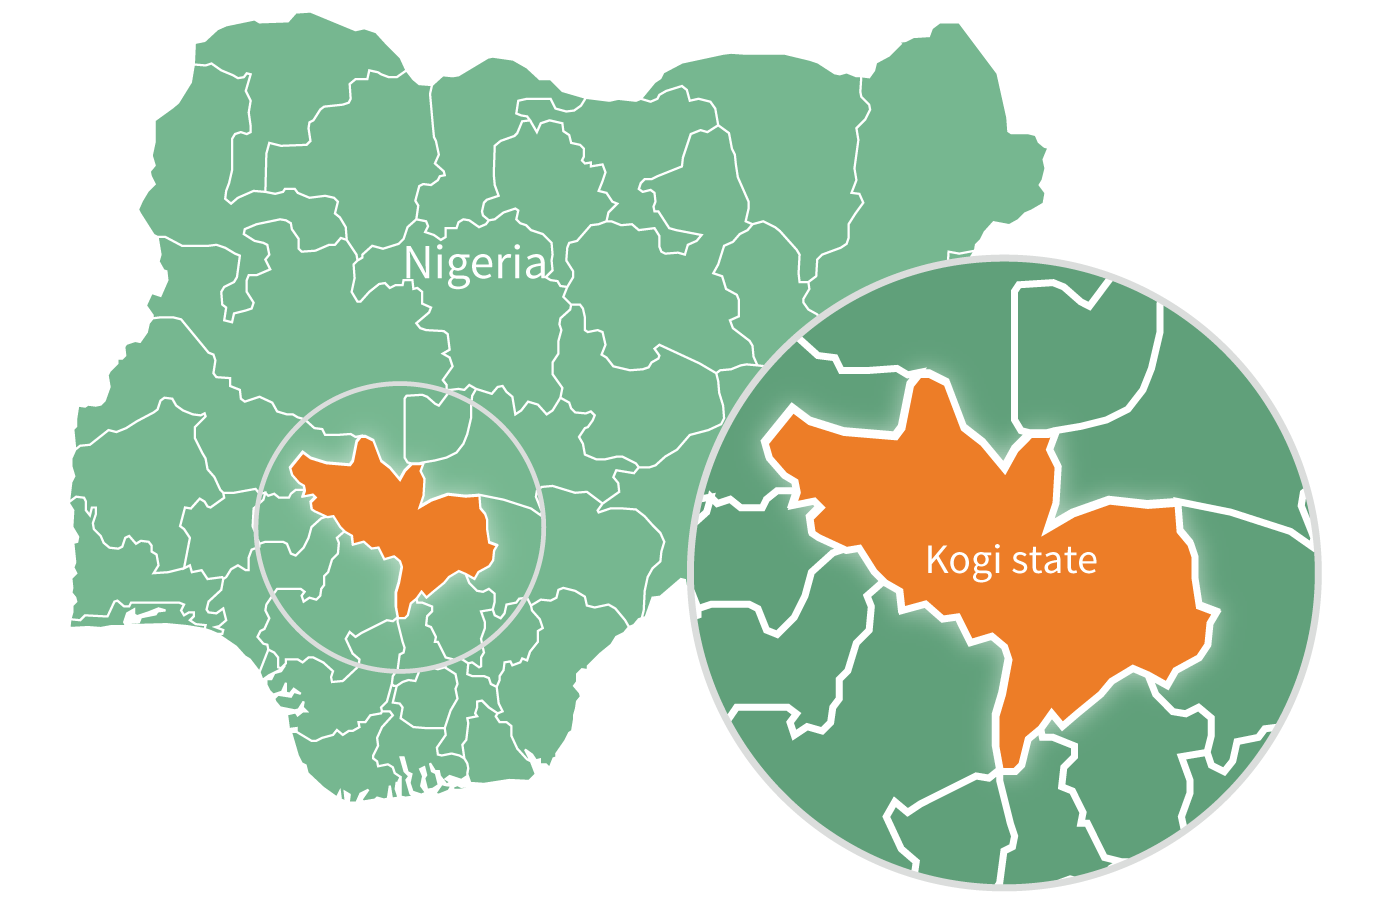 Nigeria map featuring Kogi state